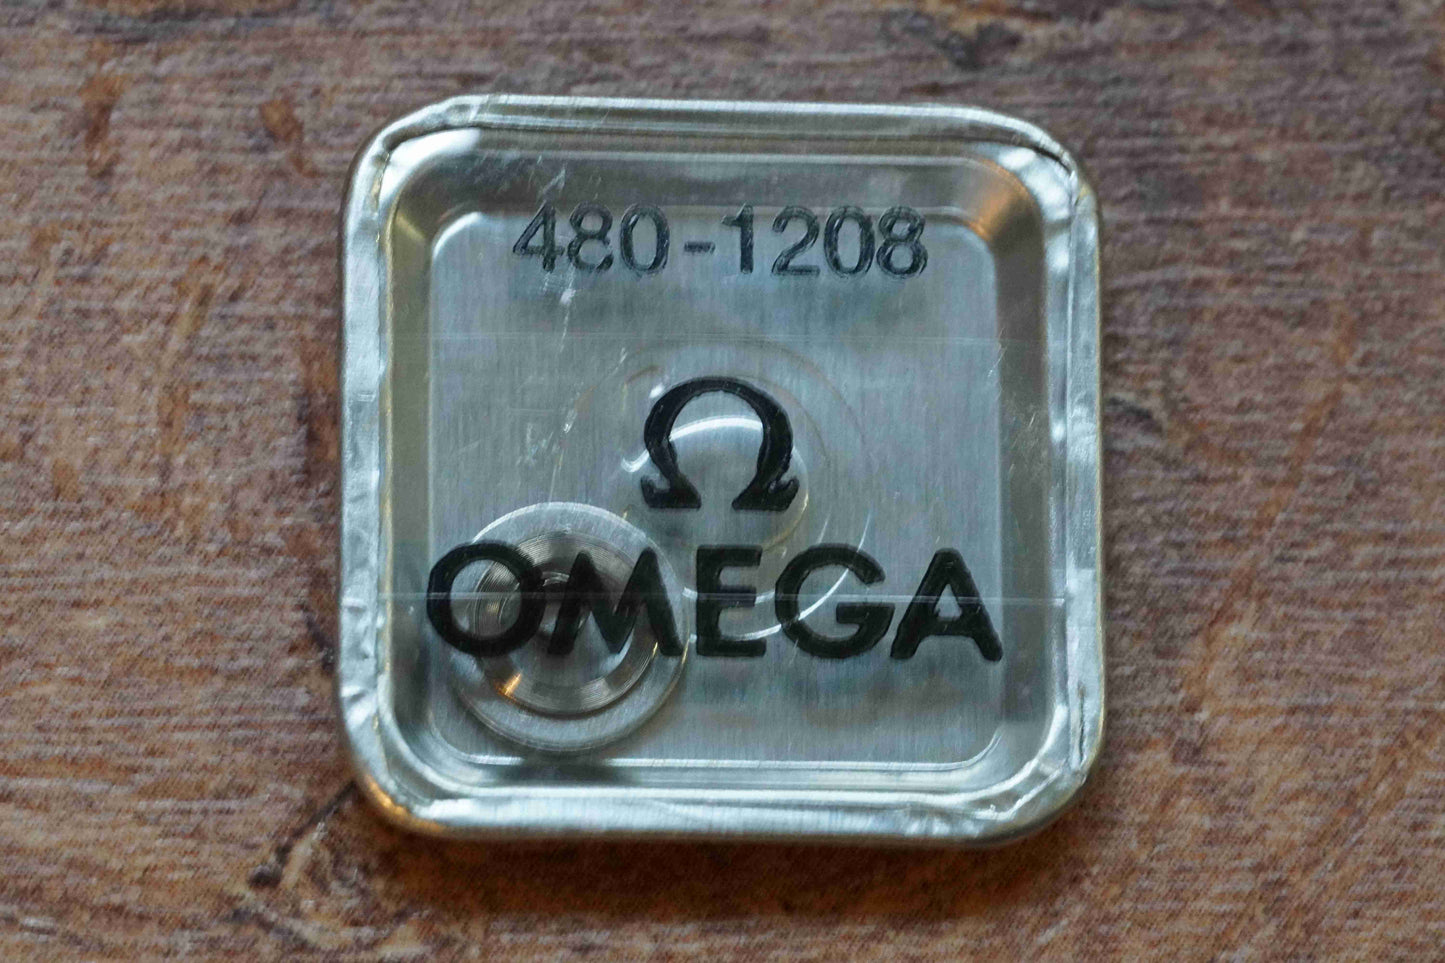 Omega cal 480 part 1208 Mainspring